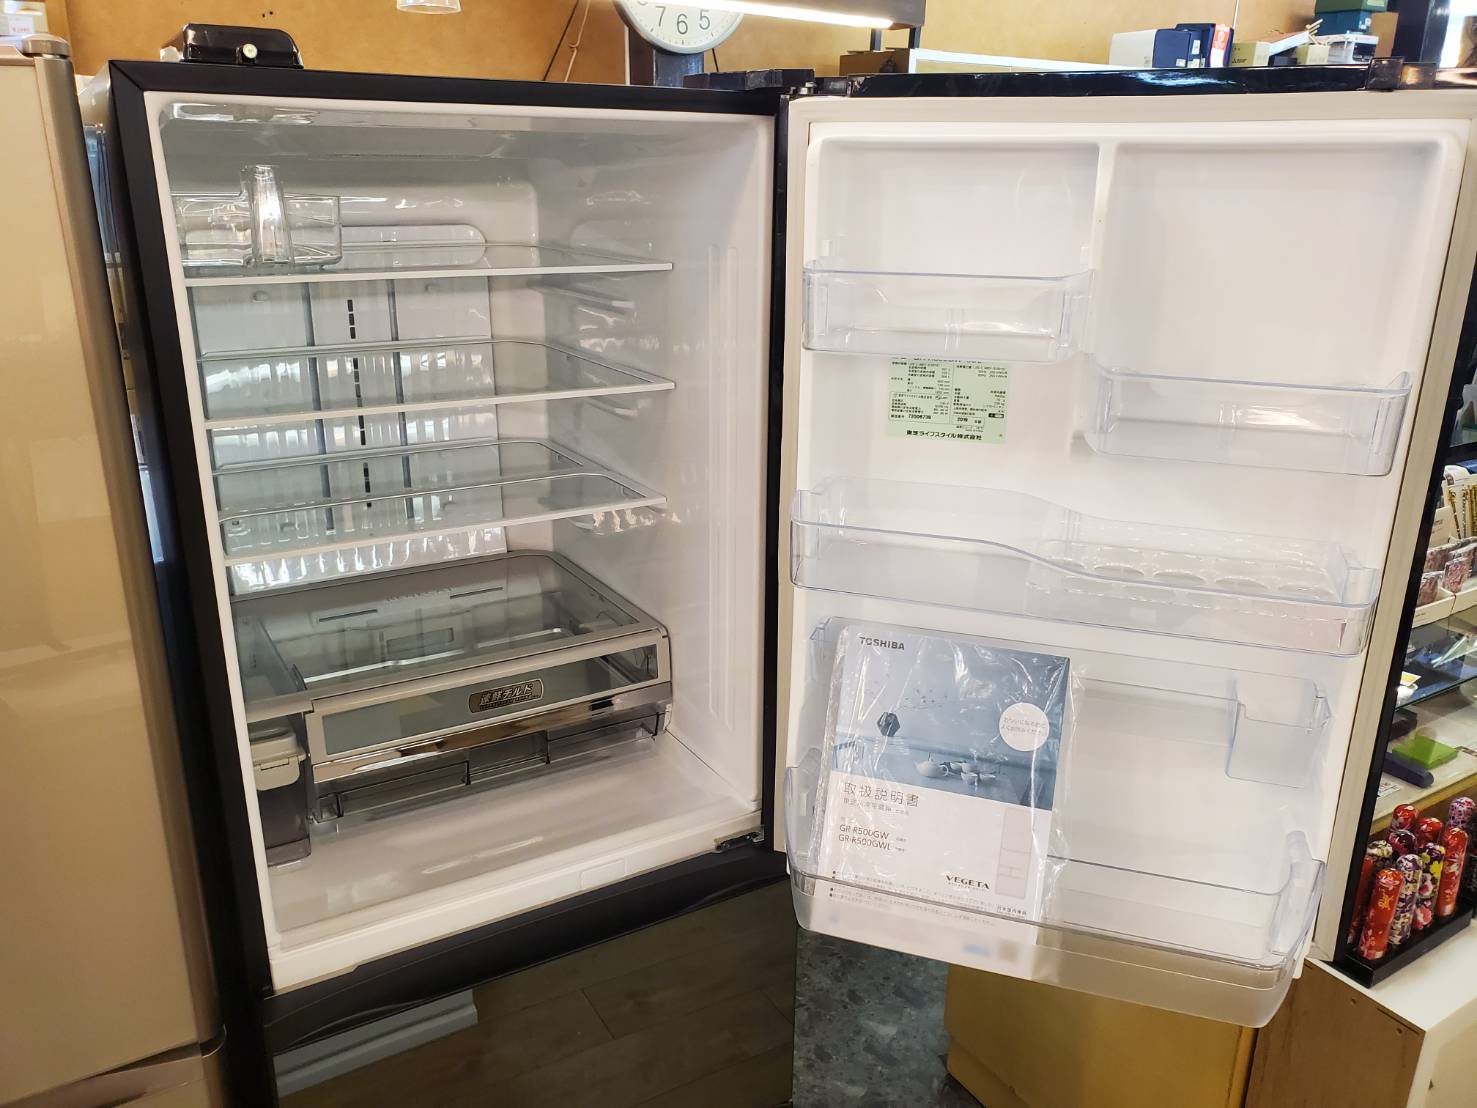 2007年 東芝 401L 冷凍冷蔵庫 自動製氷機能付き - キッチン家電